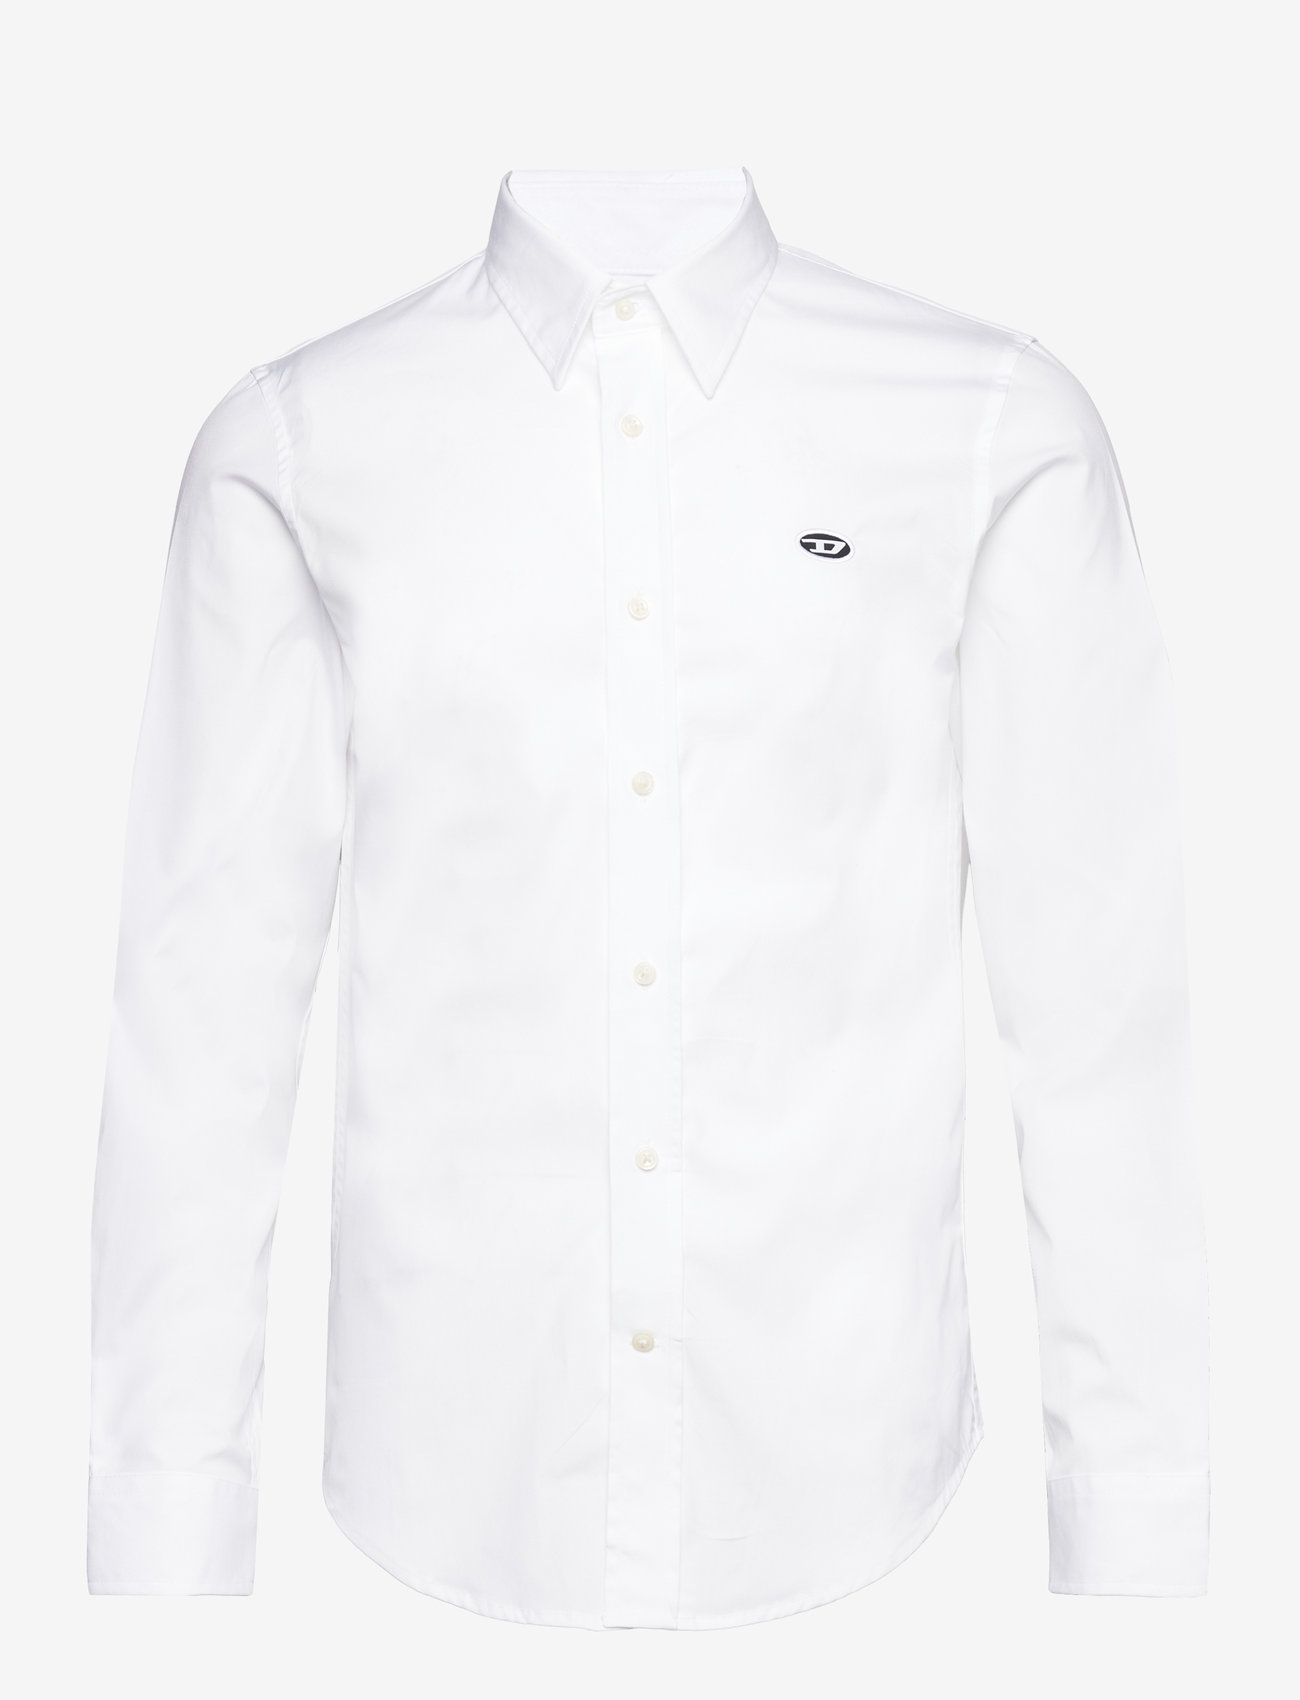 Diesel - S-BENNY-A SHIRT - basic shirts - white - 0